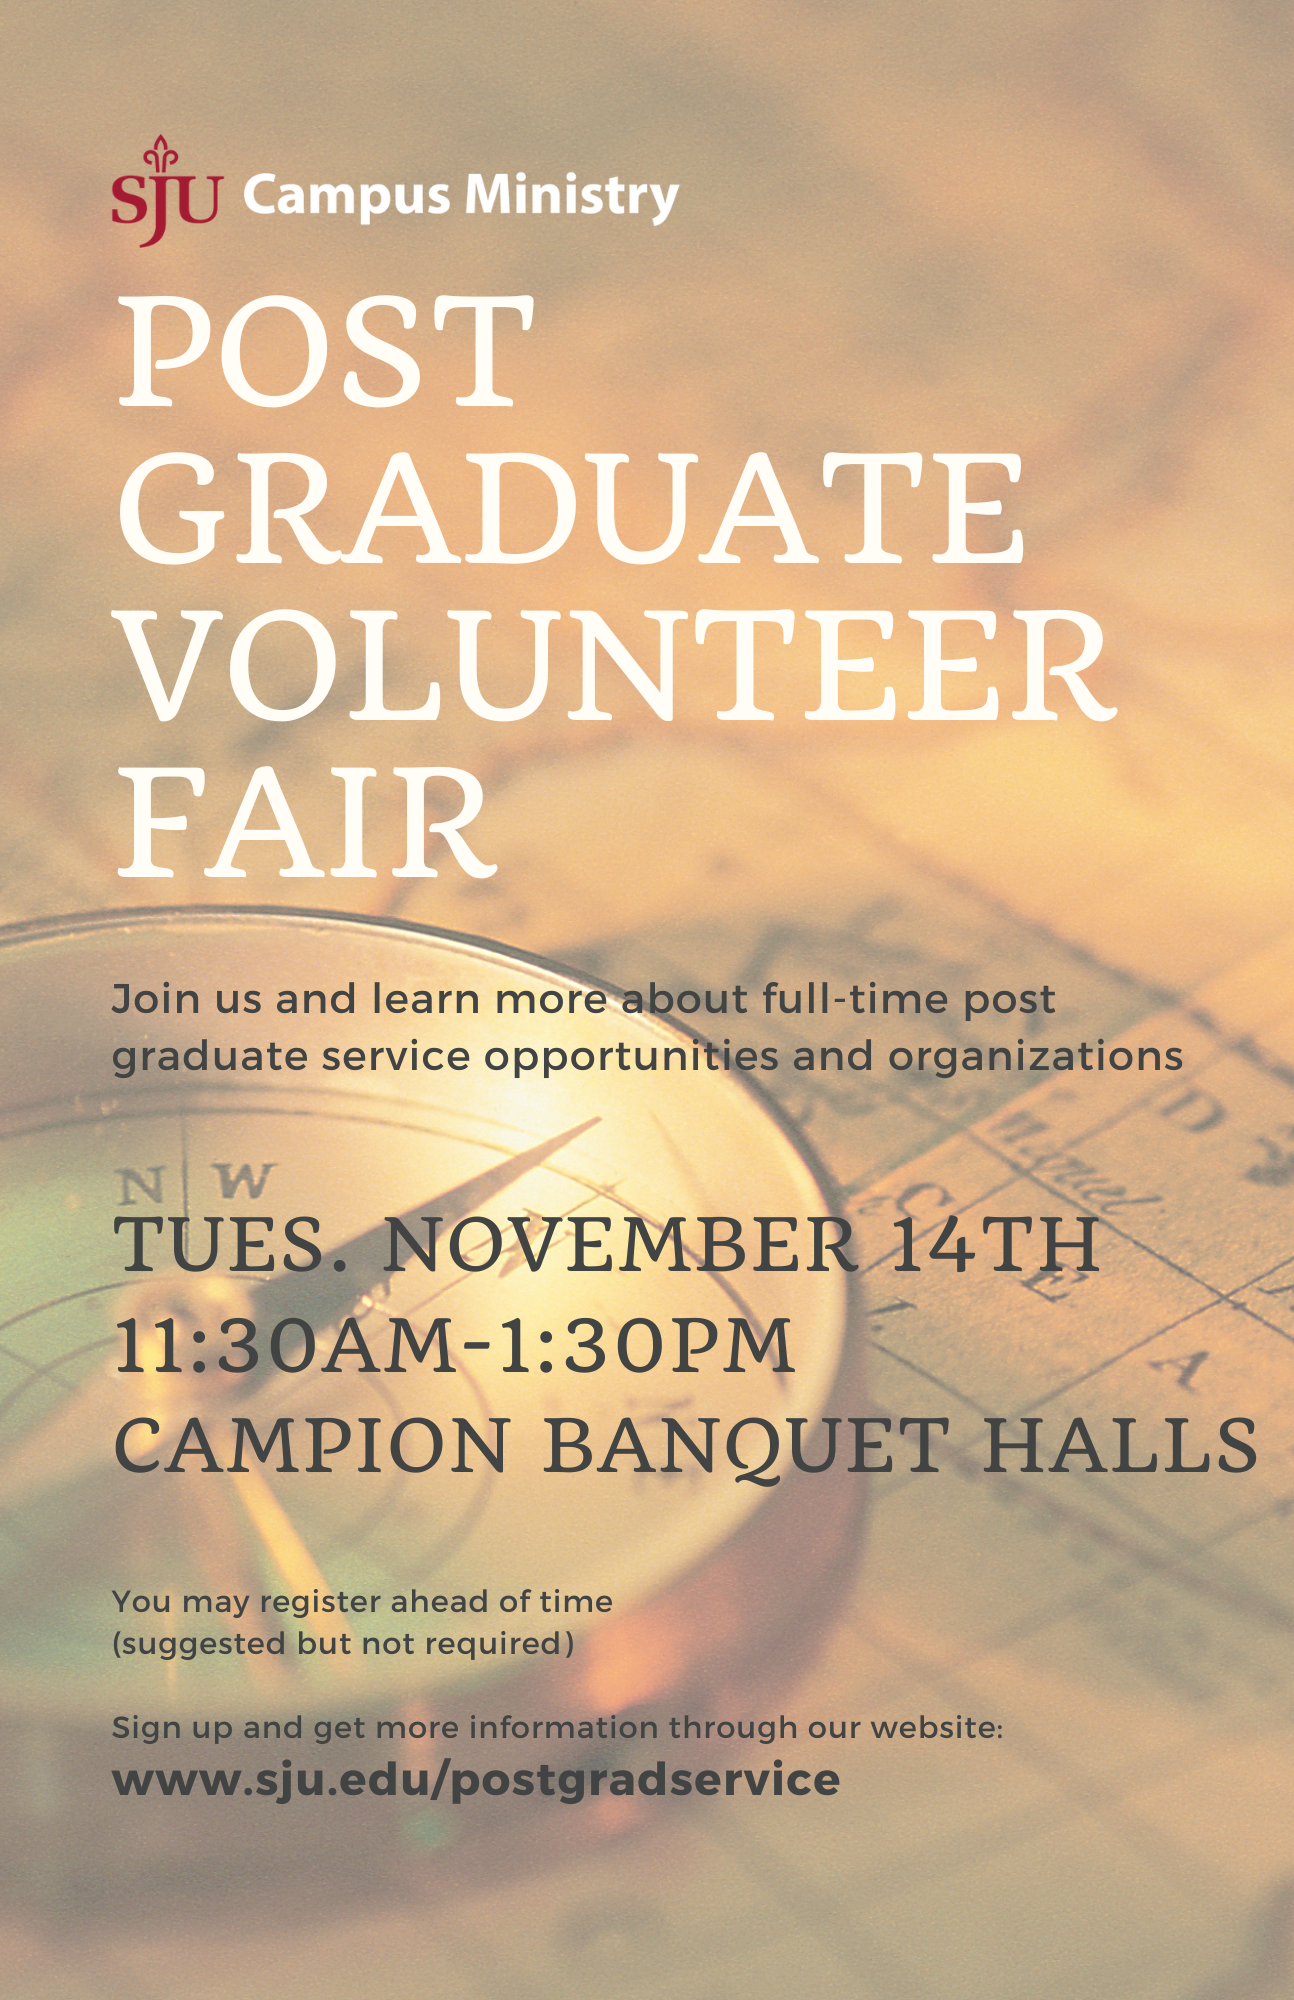 Flyer advertising Post Grad Volunteer Fair Nov 14th 11:30-1:30 Campion Banquet Halls